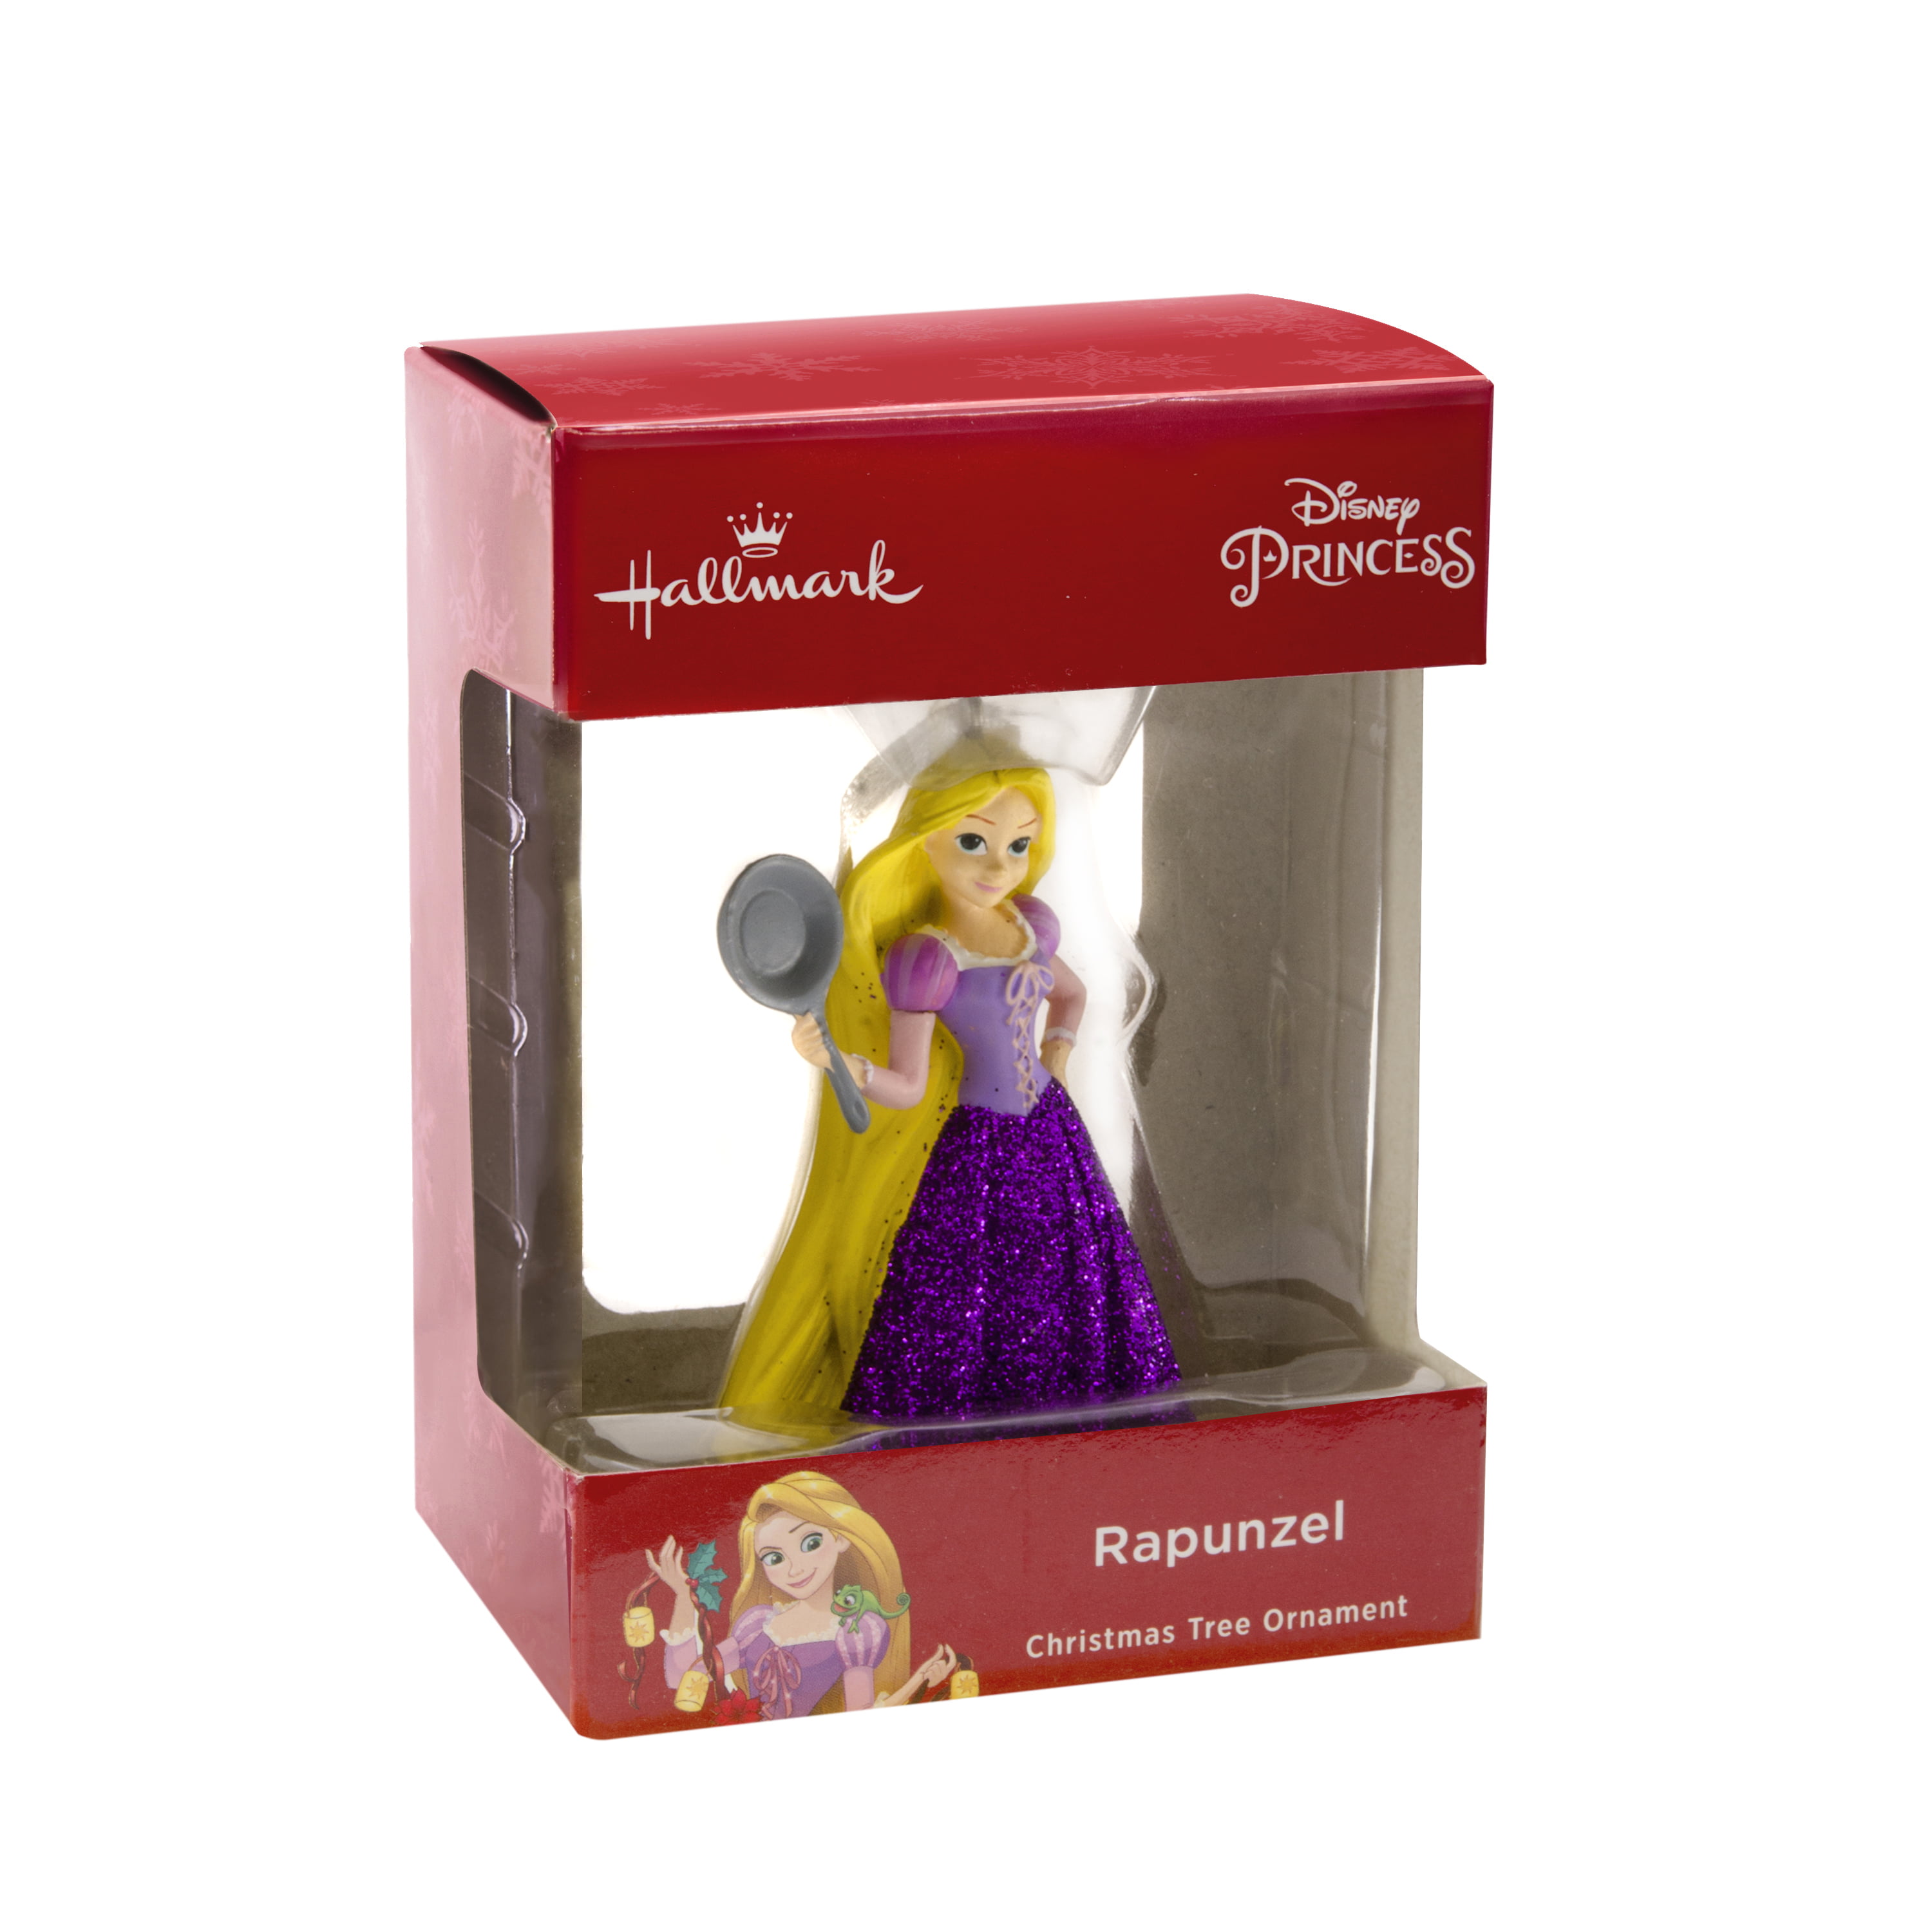 2010 Hallmark RAPUNZEL Ornament TANGLED Disney Princess